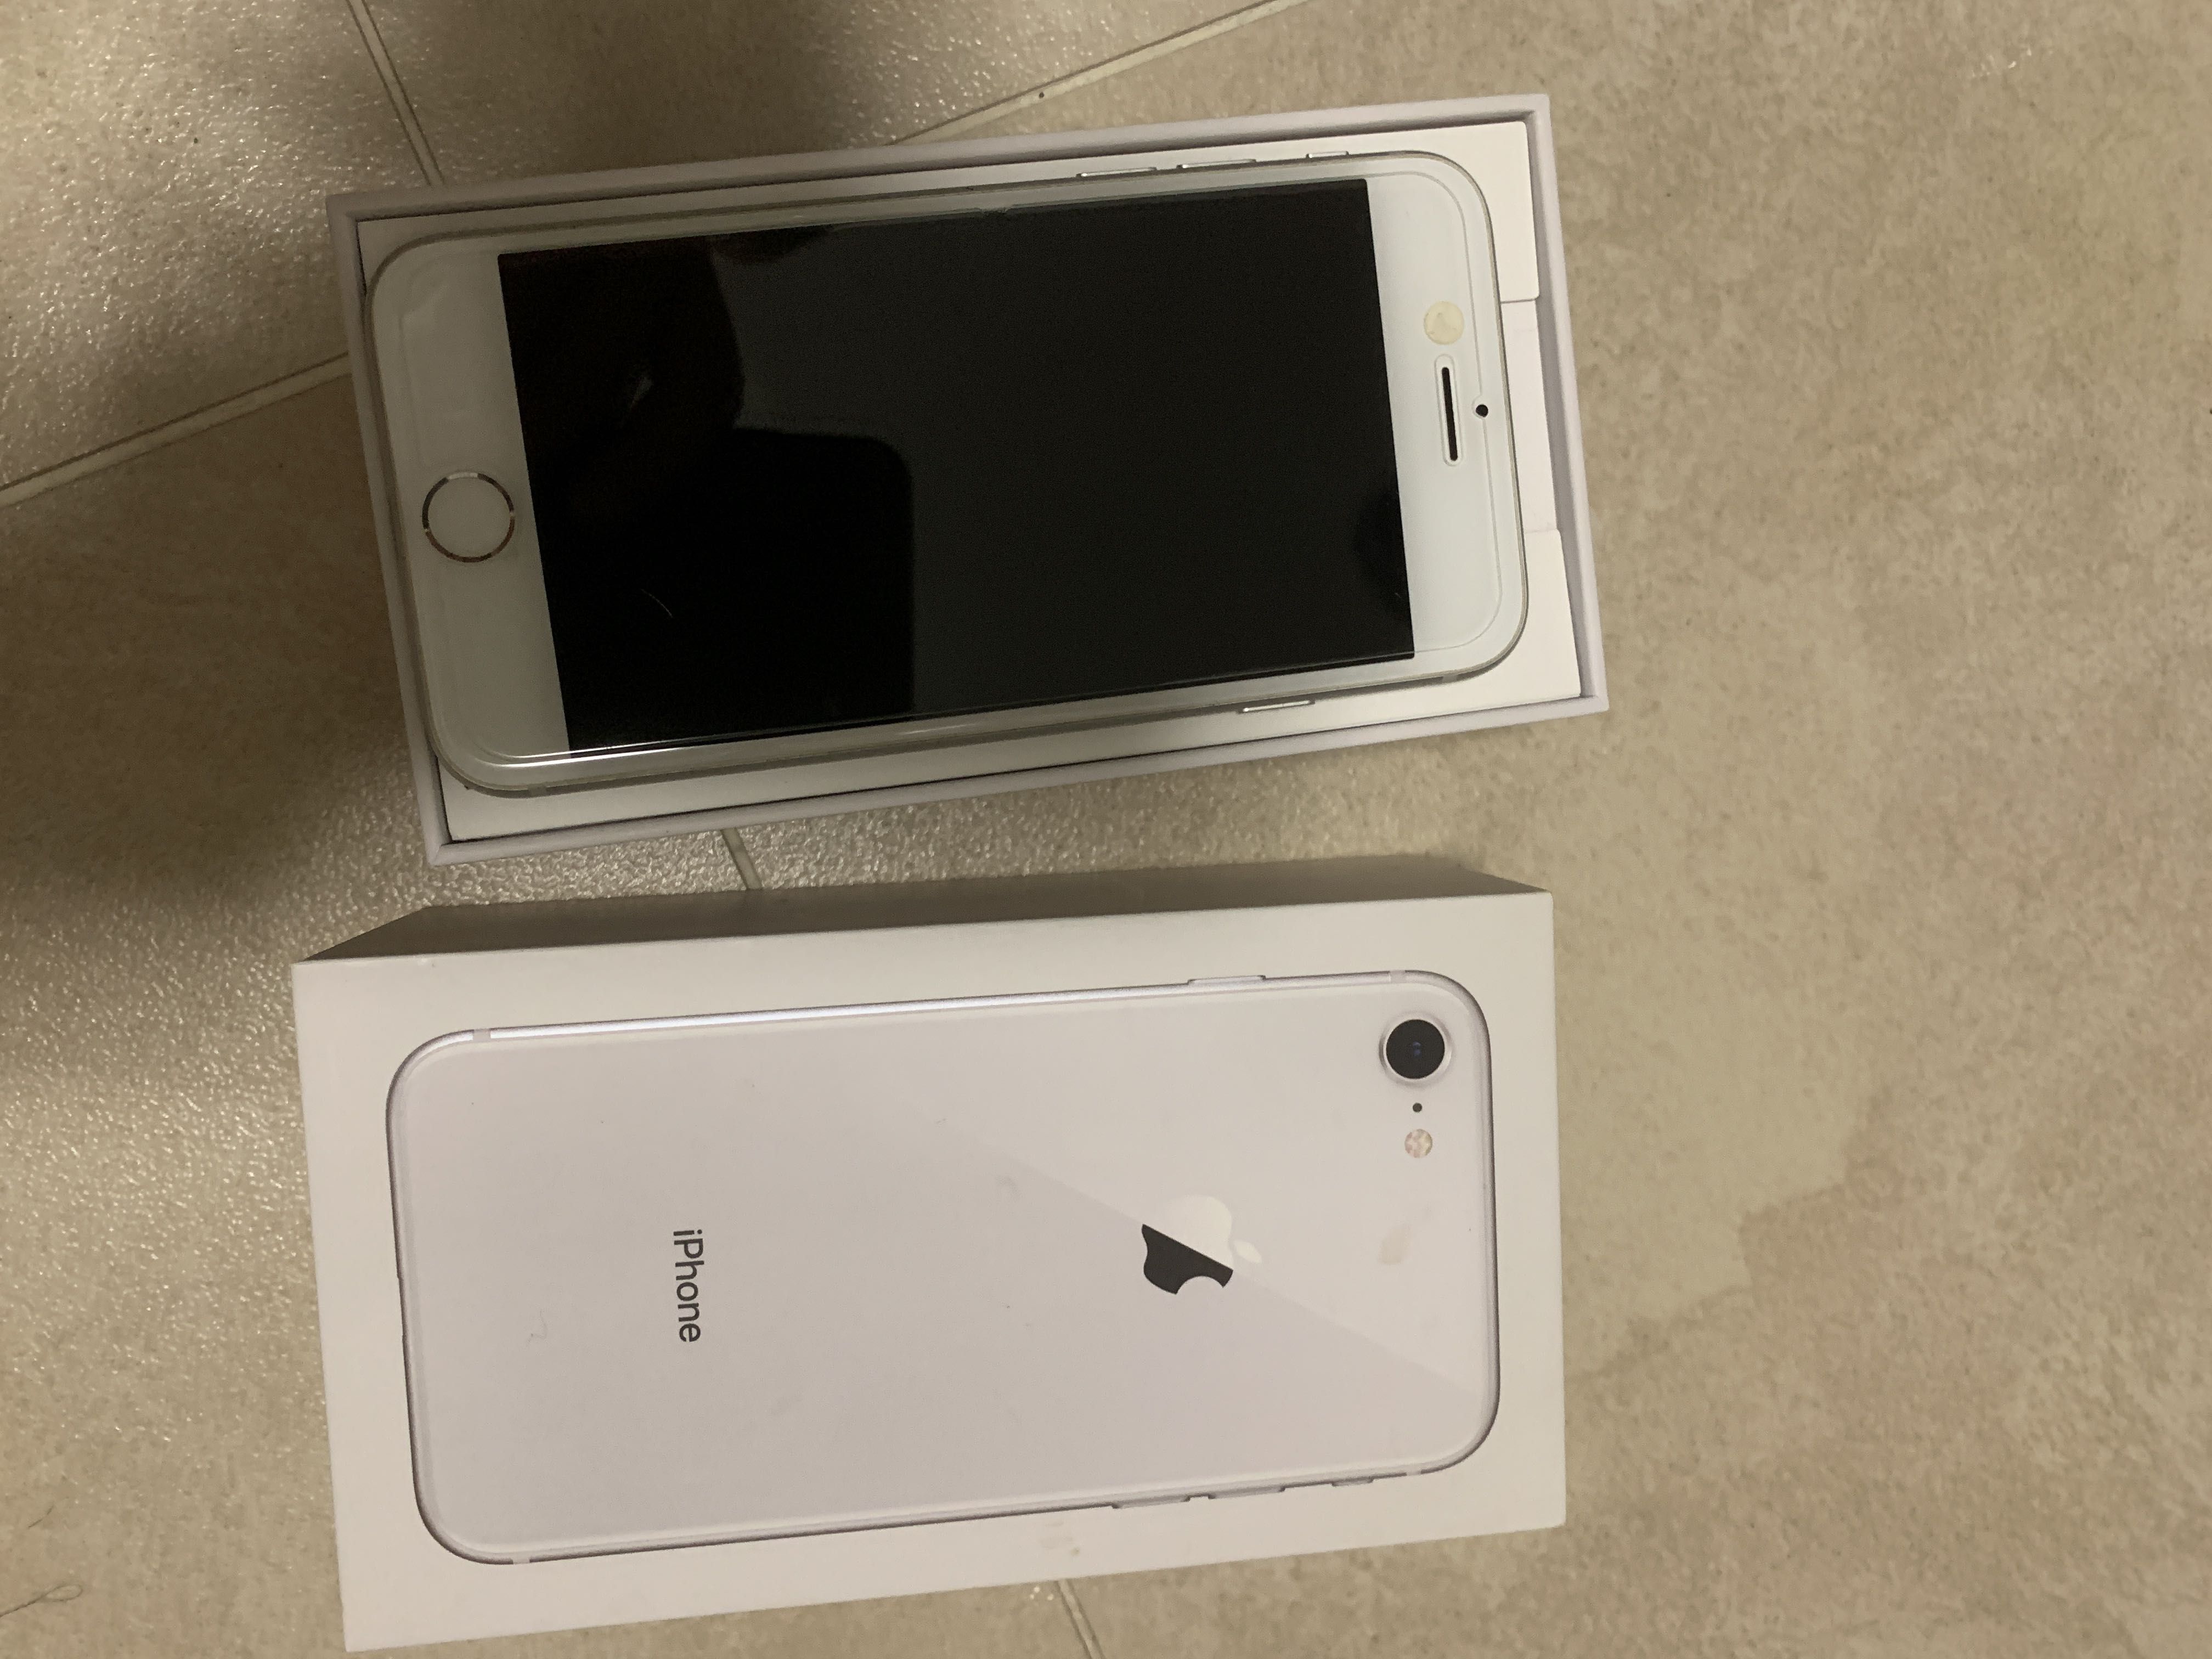 IPhone 8 64GB 白色有盒, 手提電話, 手機, iPhone, iPhone 8 系列